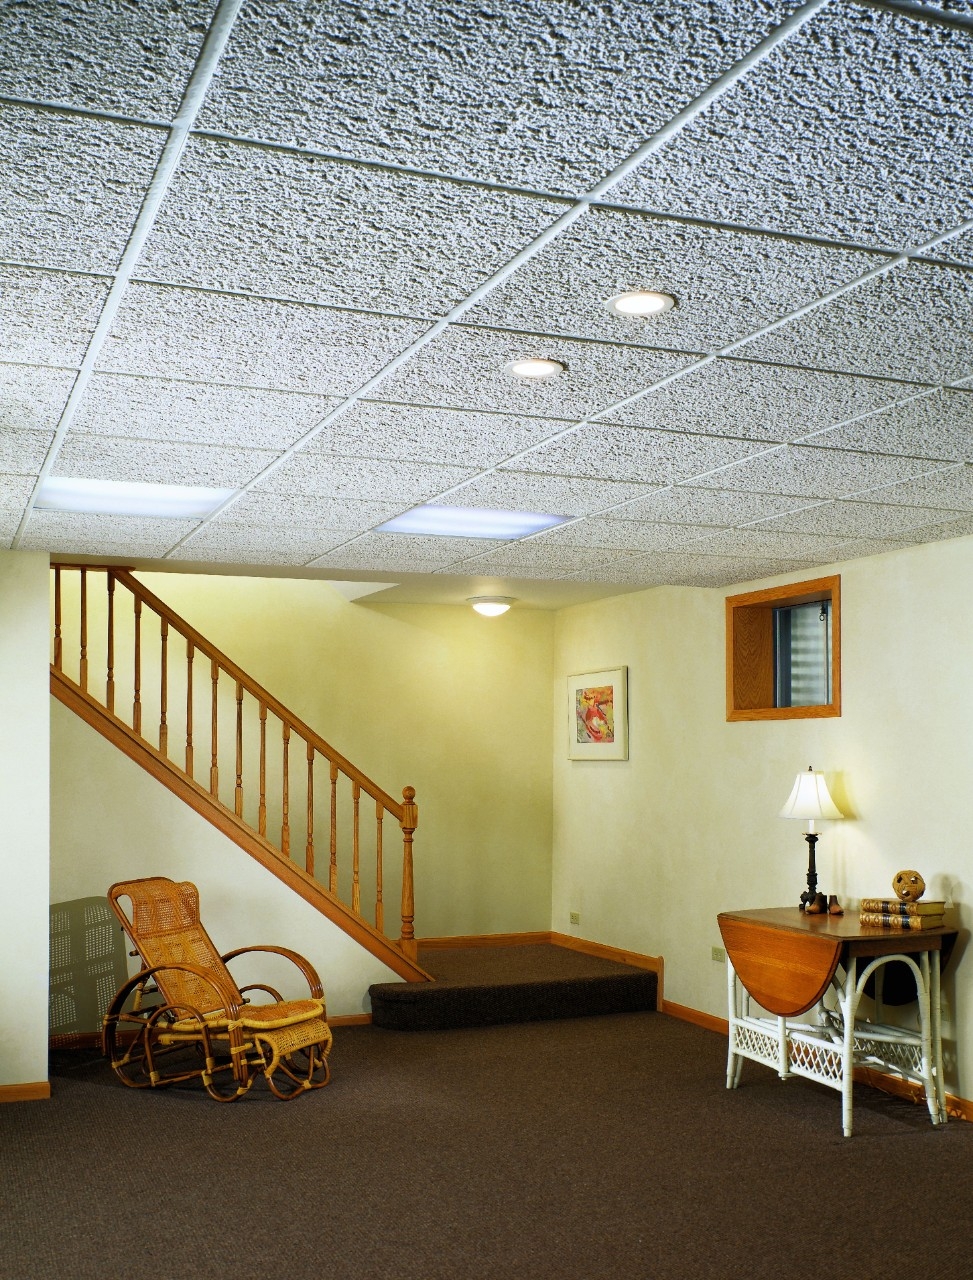 Ceiling Tile Usg Catalog Ceiling Tile Usg Catalog usg cheyenne acoustical panels acoustical heavy texture ceiling 973 X 1280